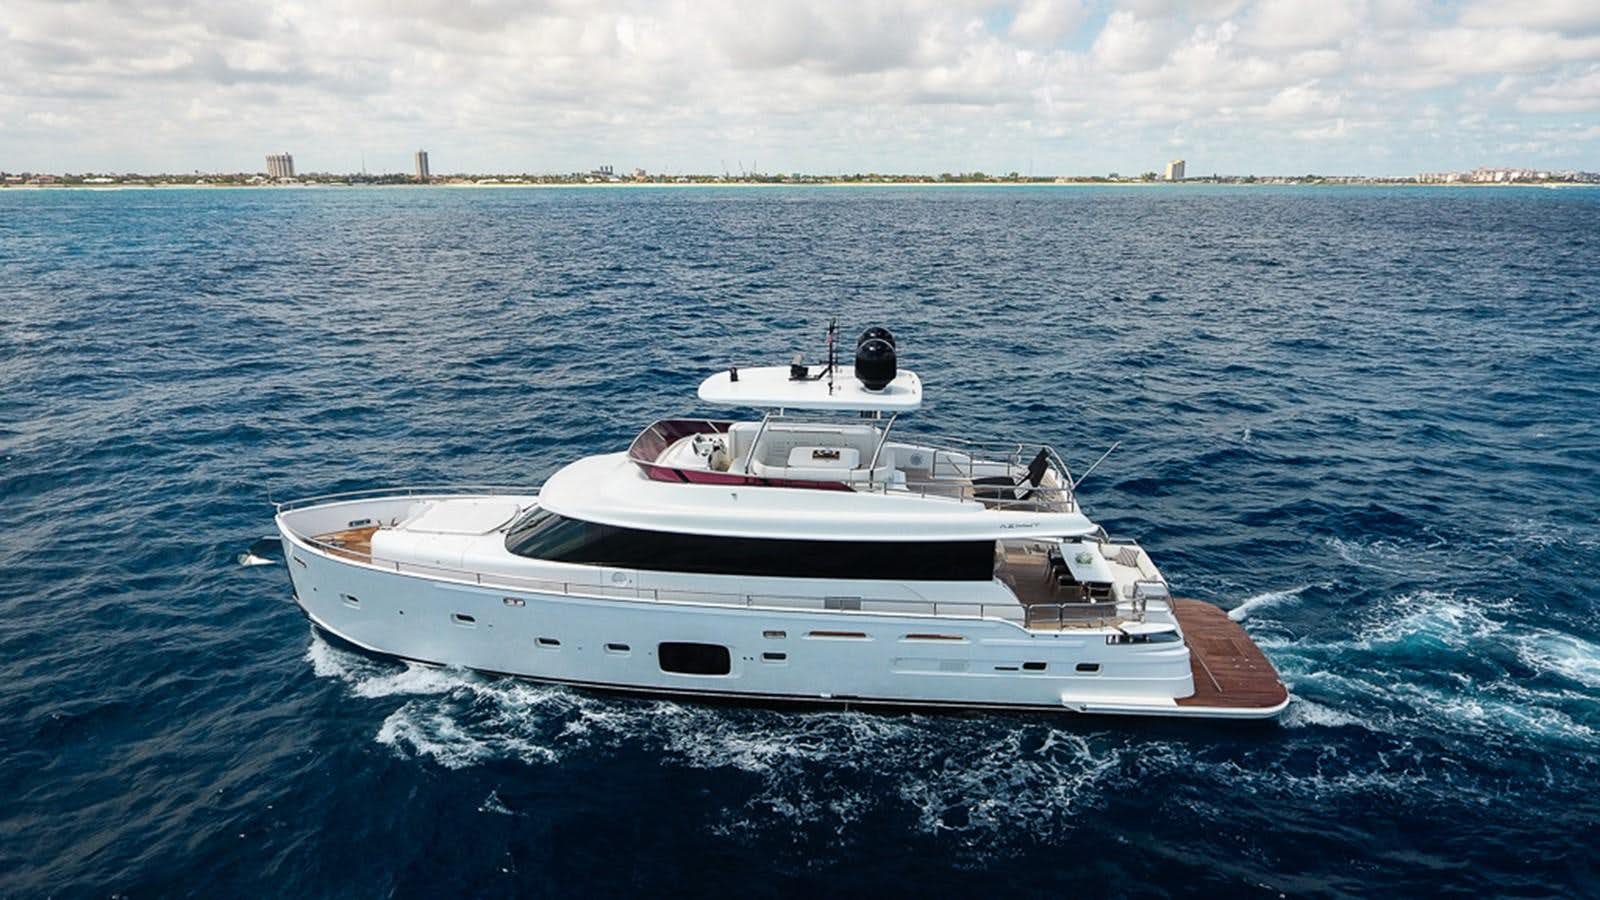 2016 azimut 76 magellano
Yacht for Sale